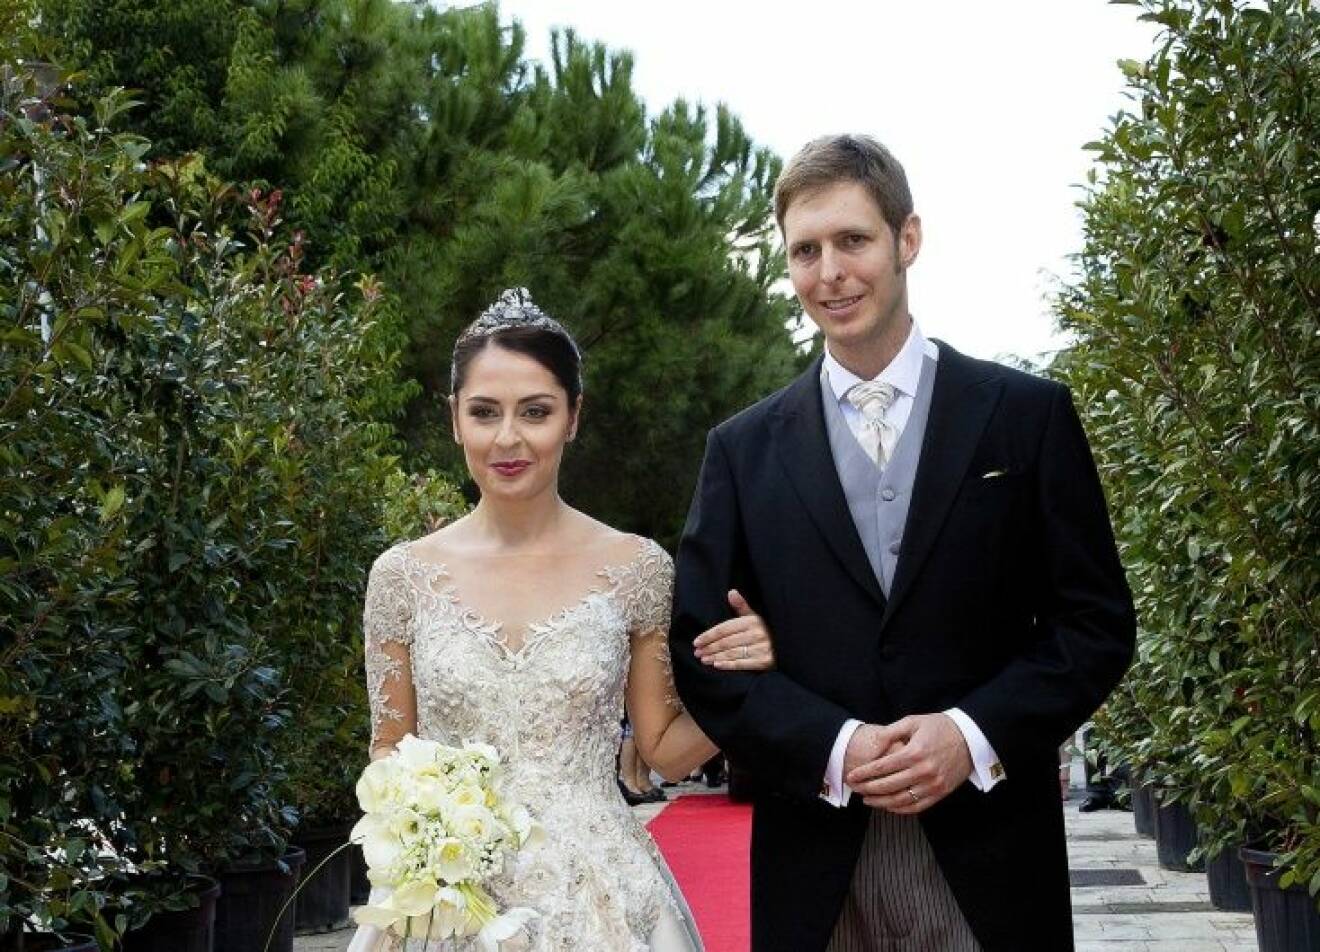 Wedding ceremony of Crown Prince Leka II and Miss Elia Zaharia in Tirana